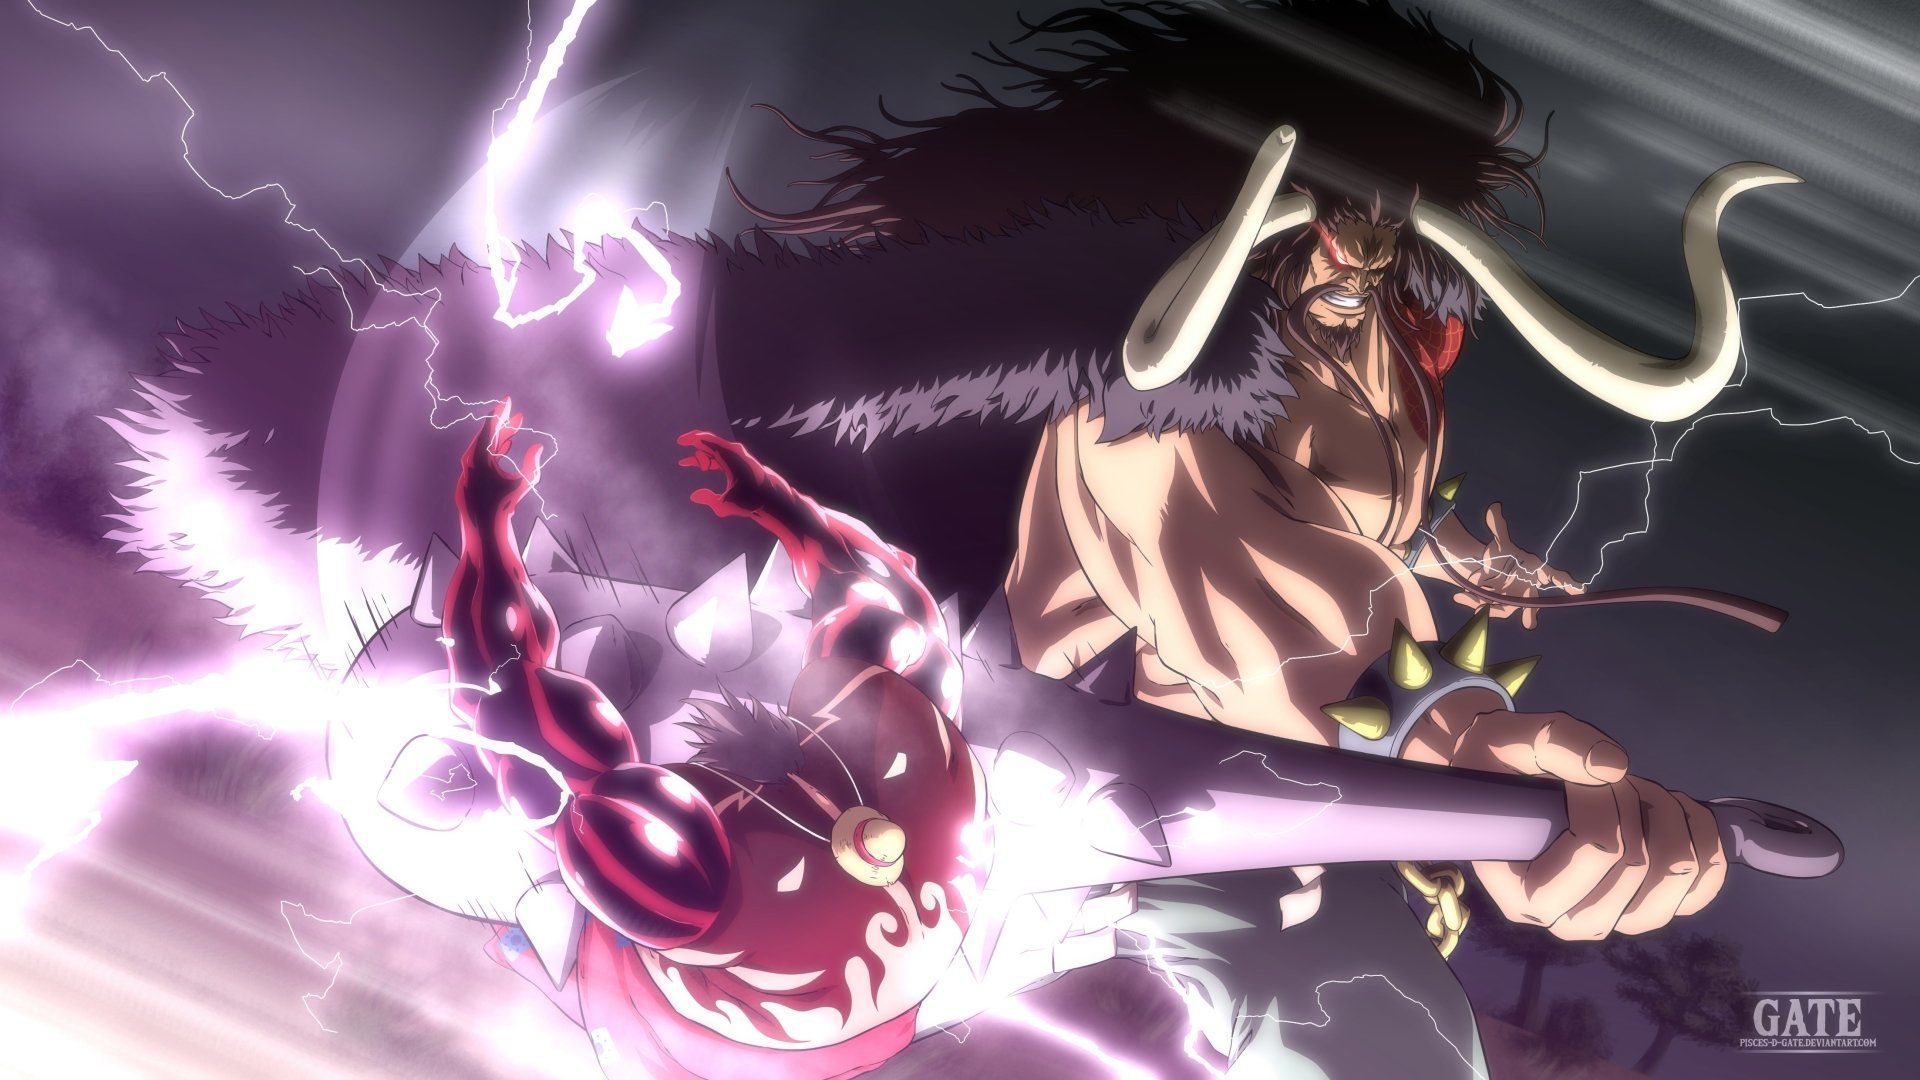 One Piece: WANO KUNI (892-Current) Finally Clashing! The Ferocious Luffy vs.  Kaido! - Watch on Crunchyroll